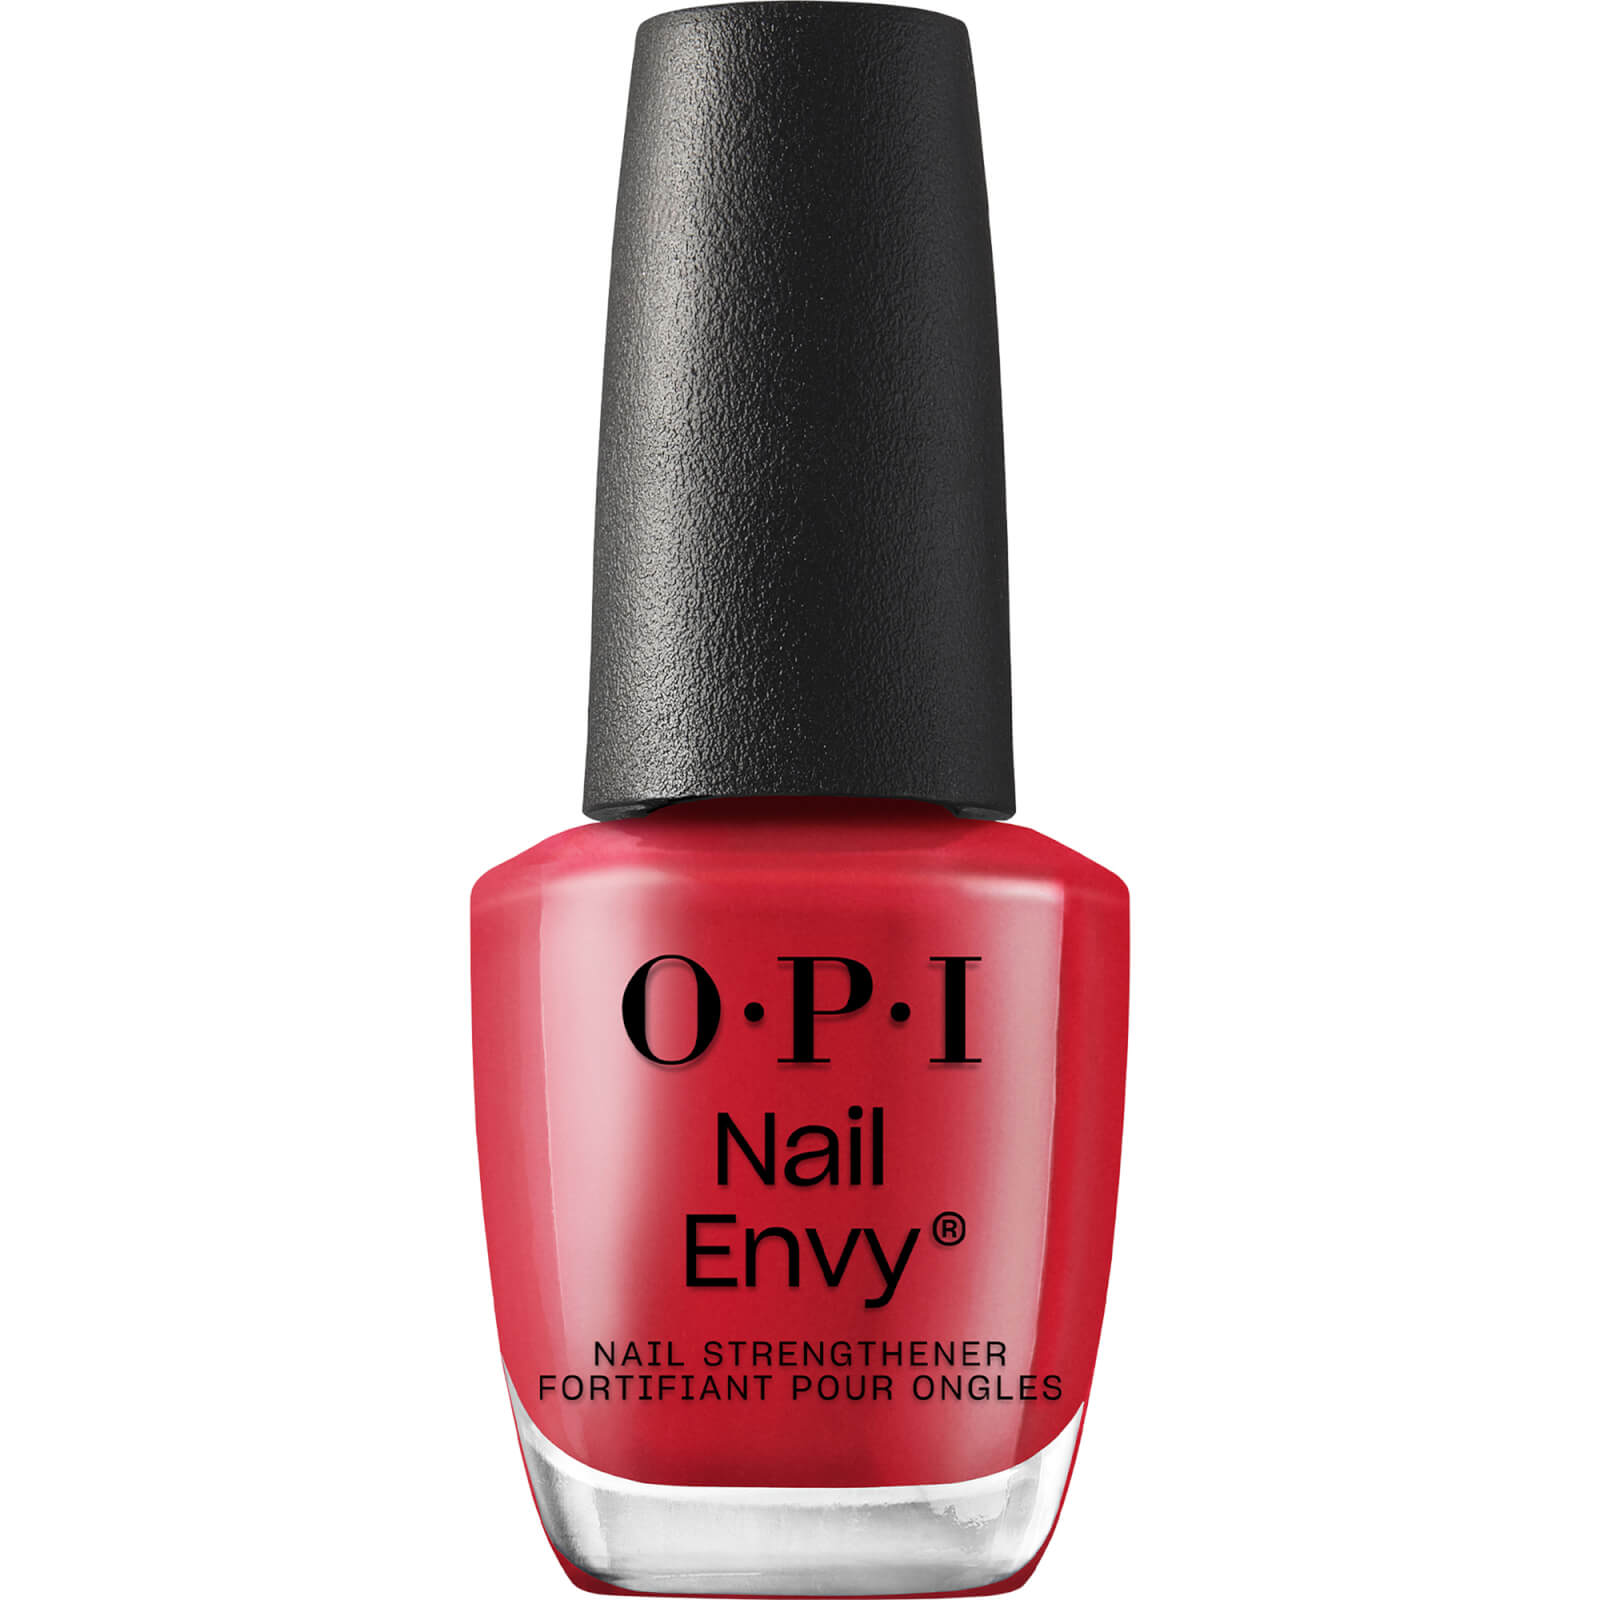 Opi Nail Envy Nail Strengthener 15ml - Big Apple Red